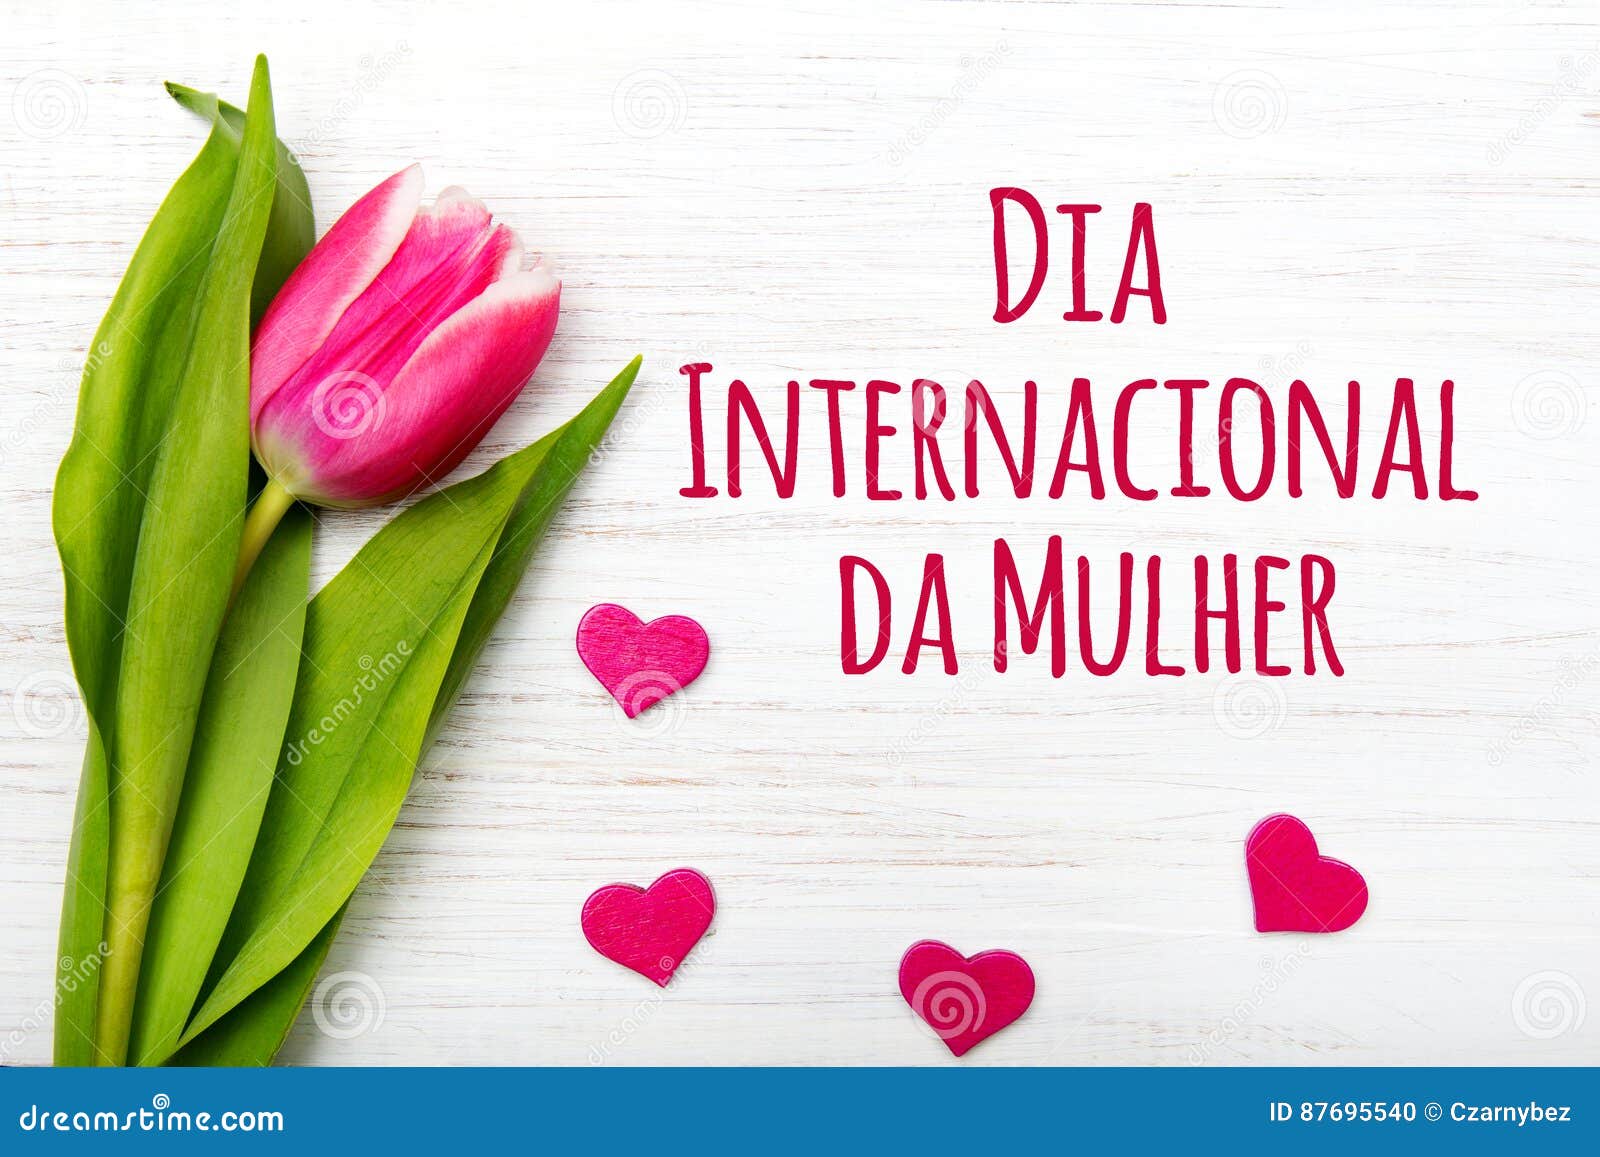 women`s day card with portuguese words `dia internacional da mulher`.